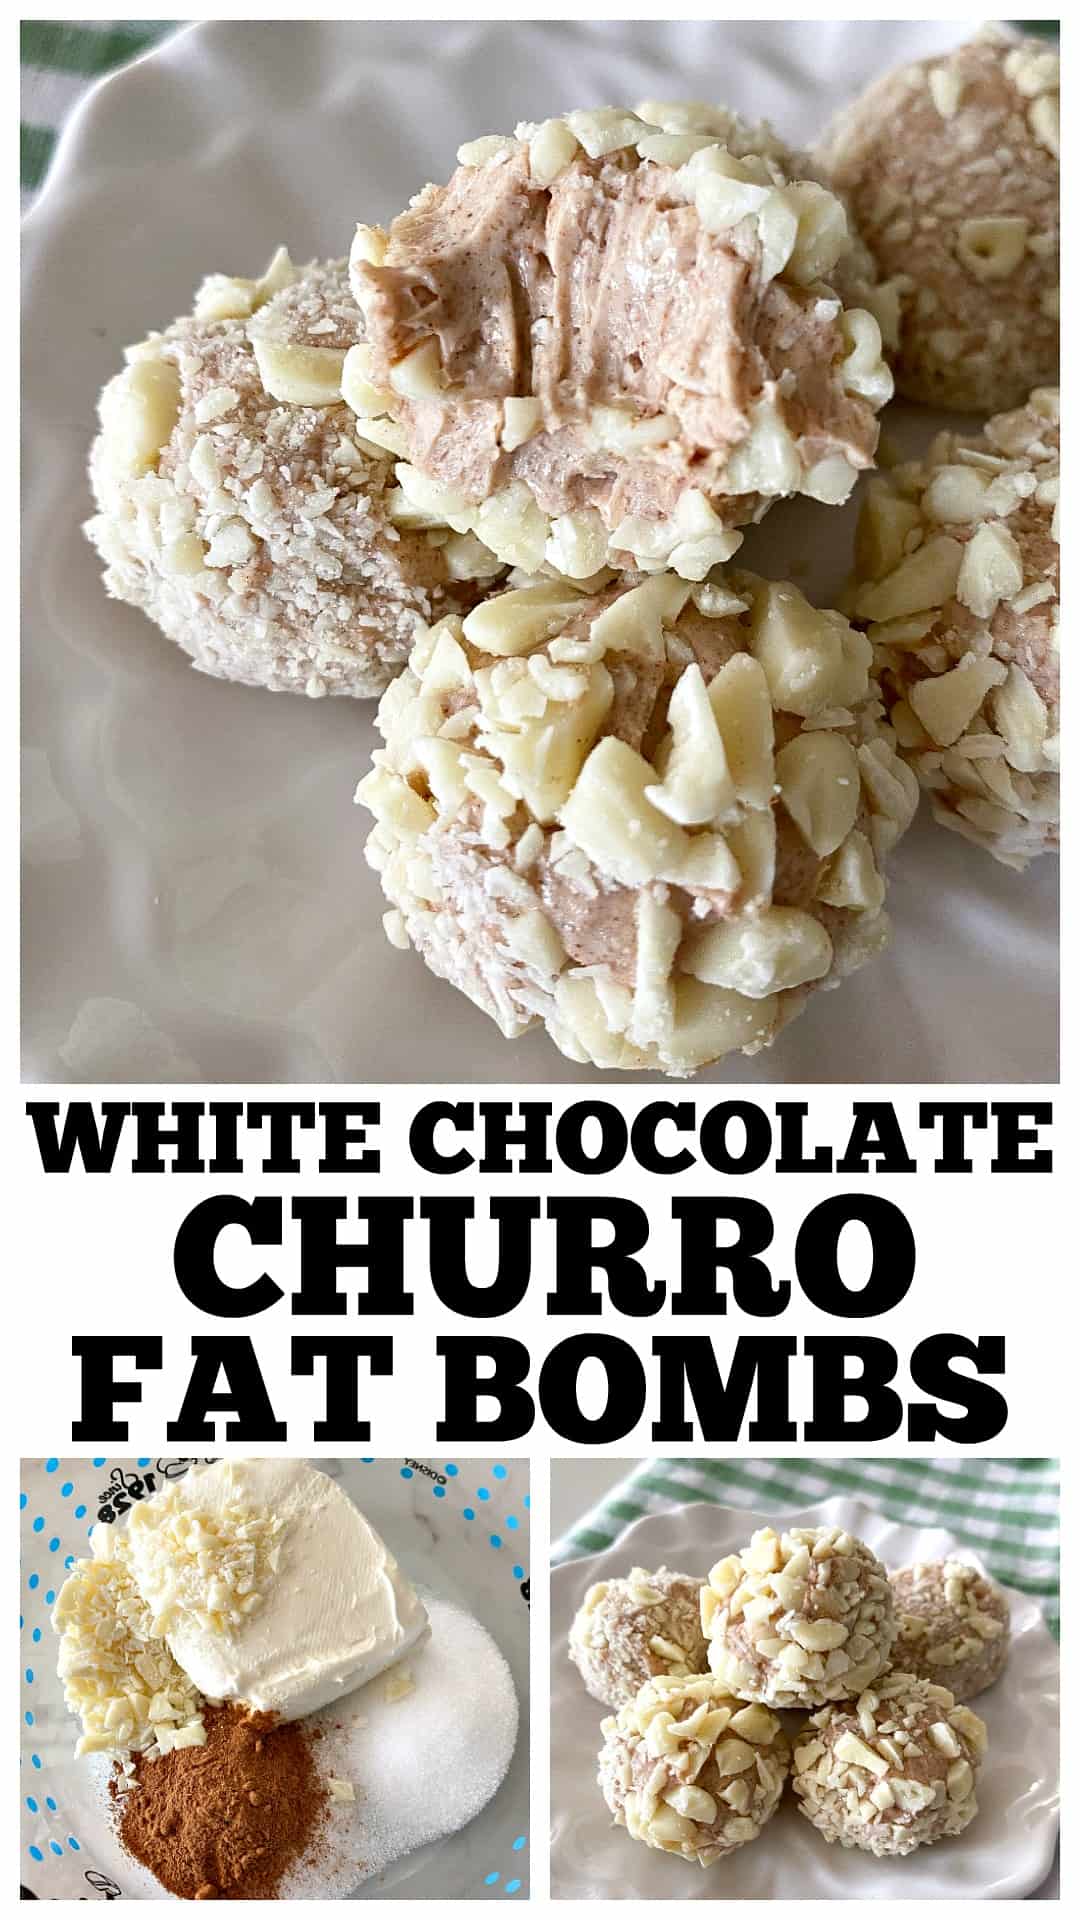 fat bombs